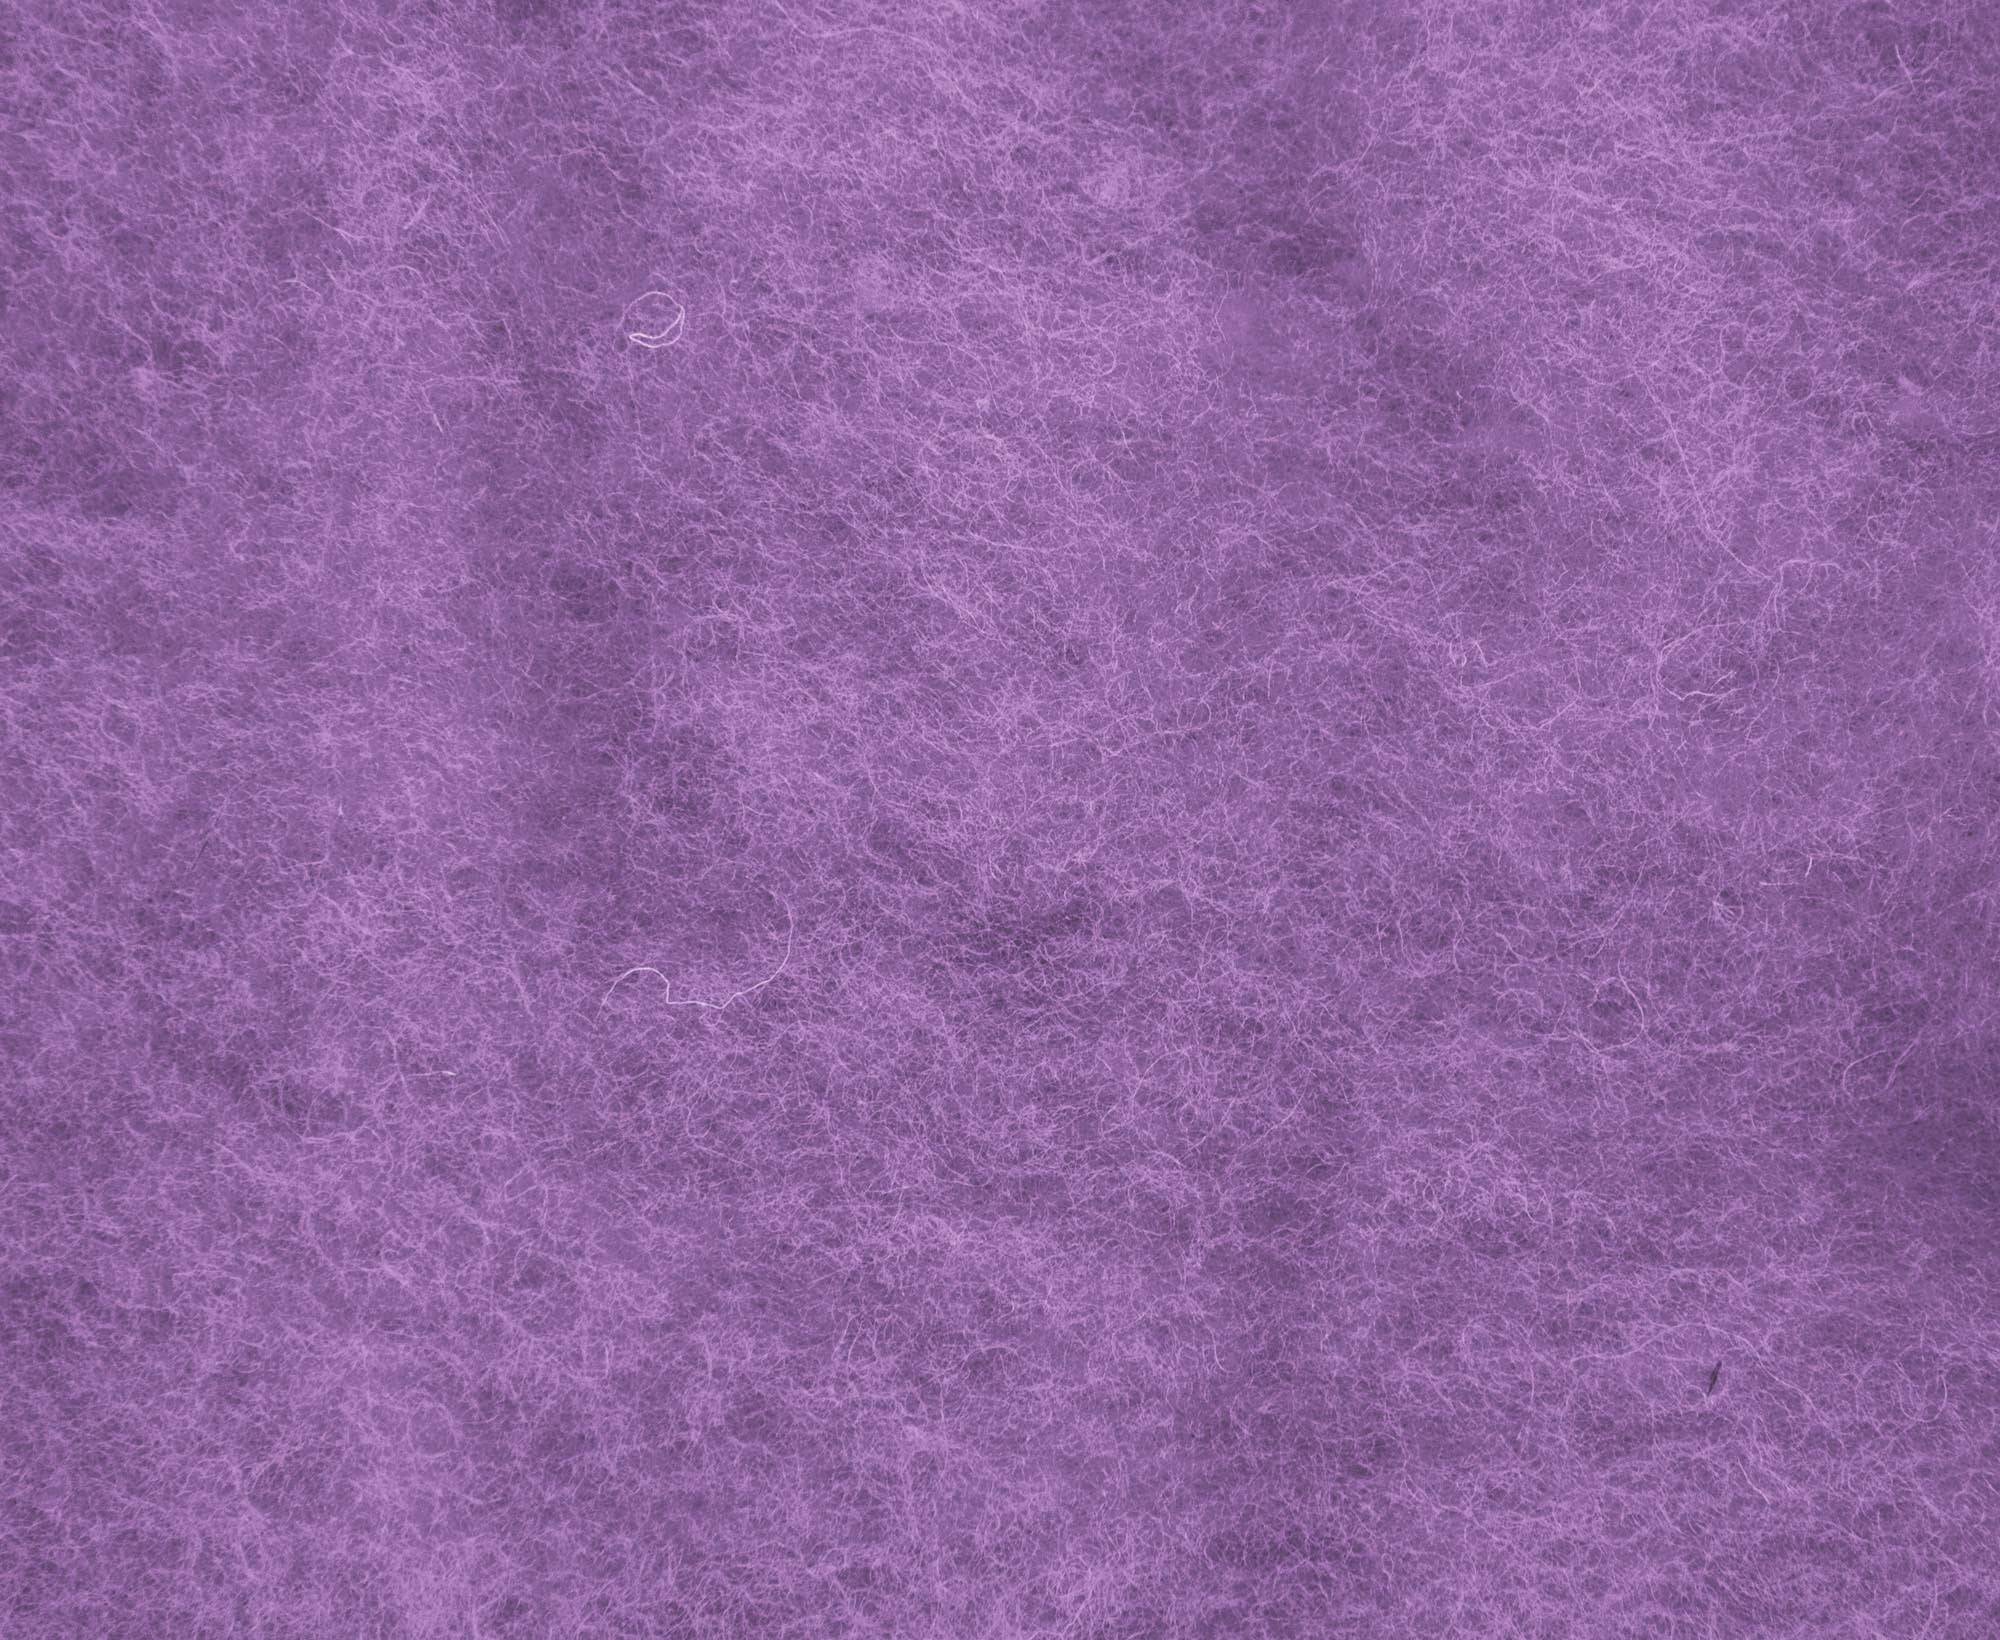 Carded Perendale Batt Lavender - World of Wool